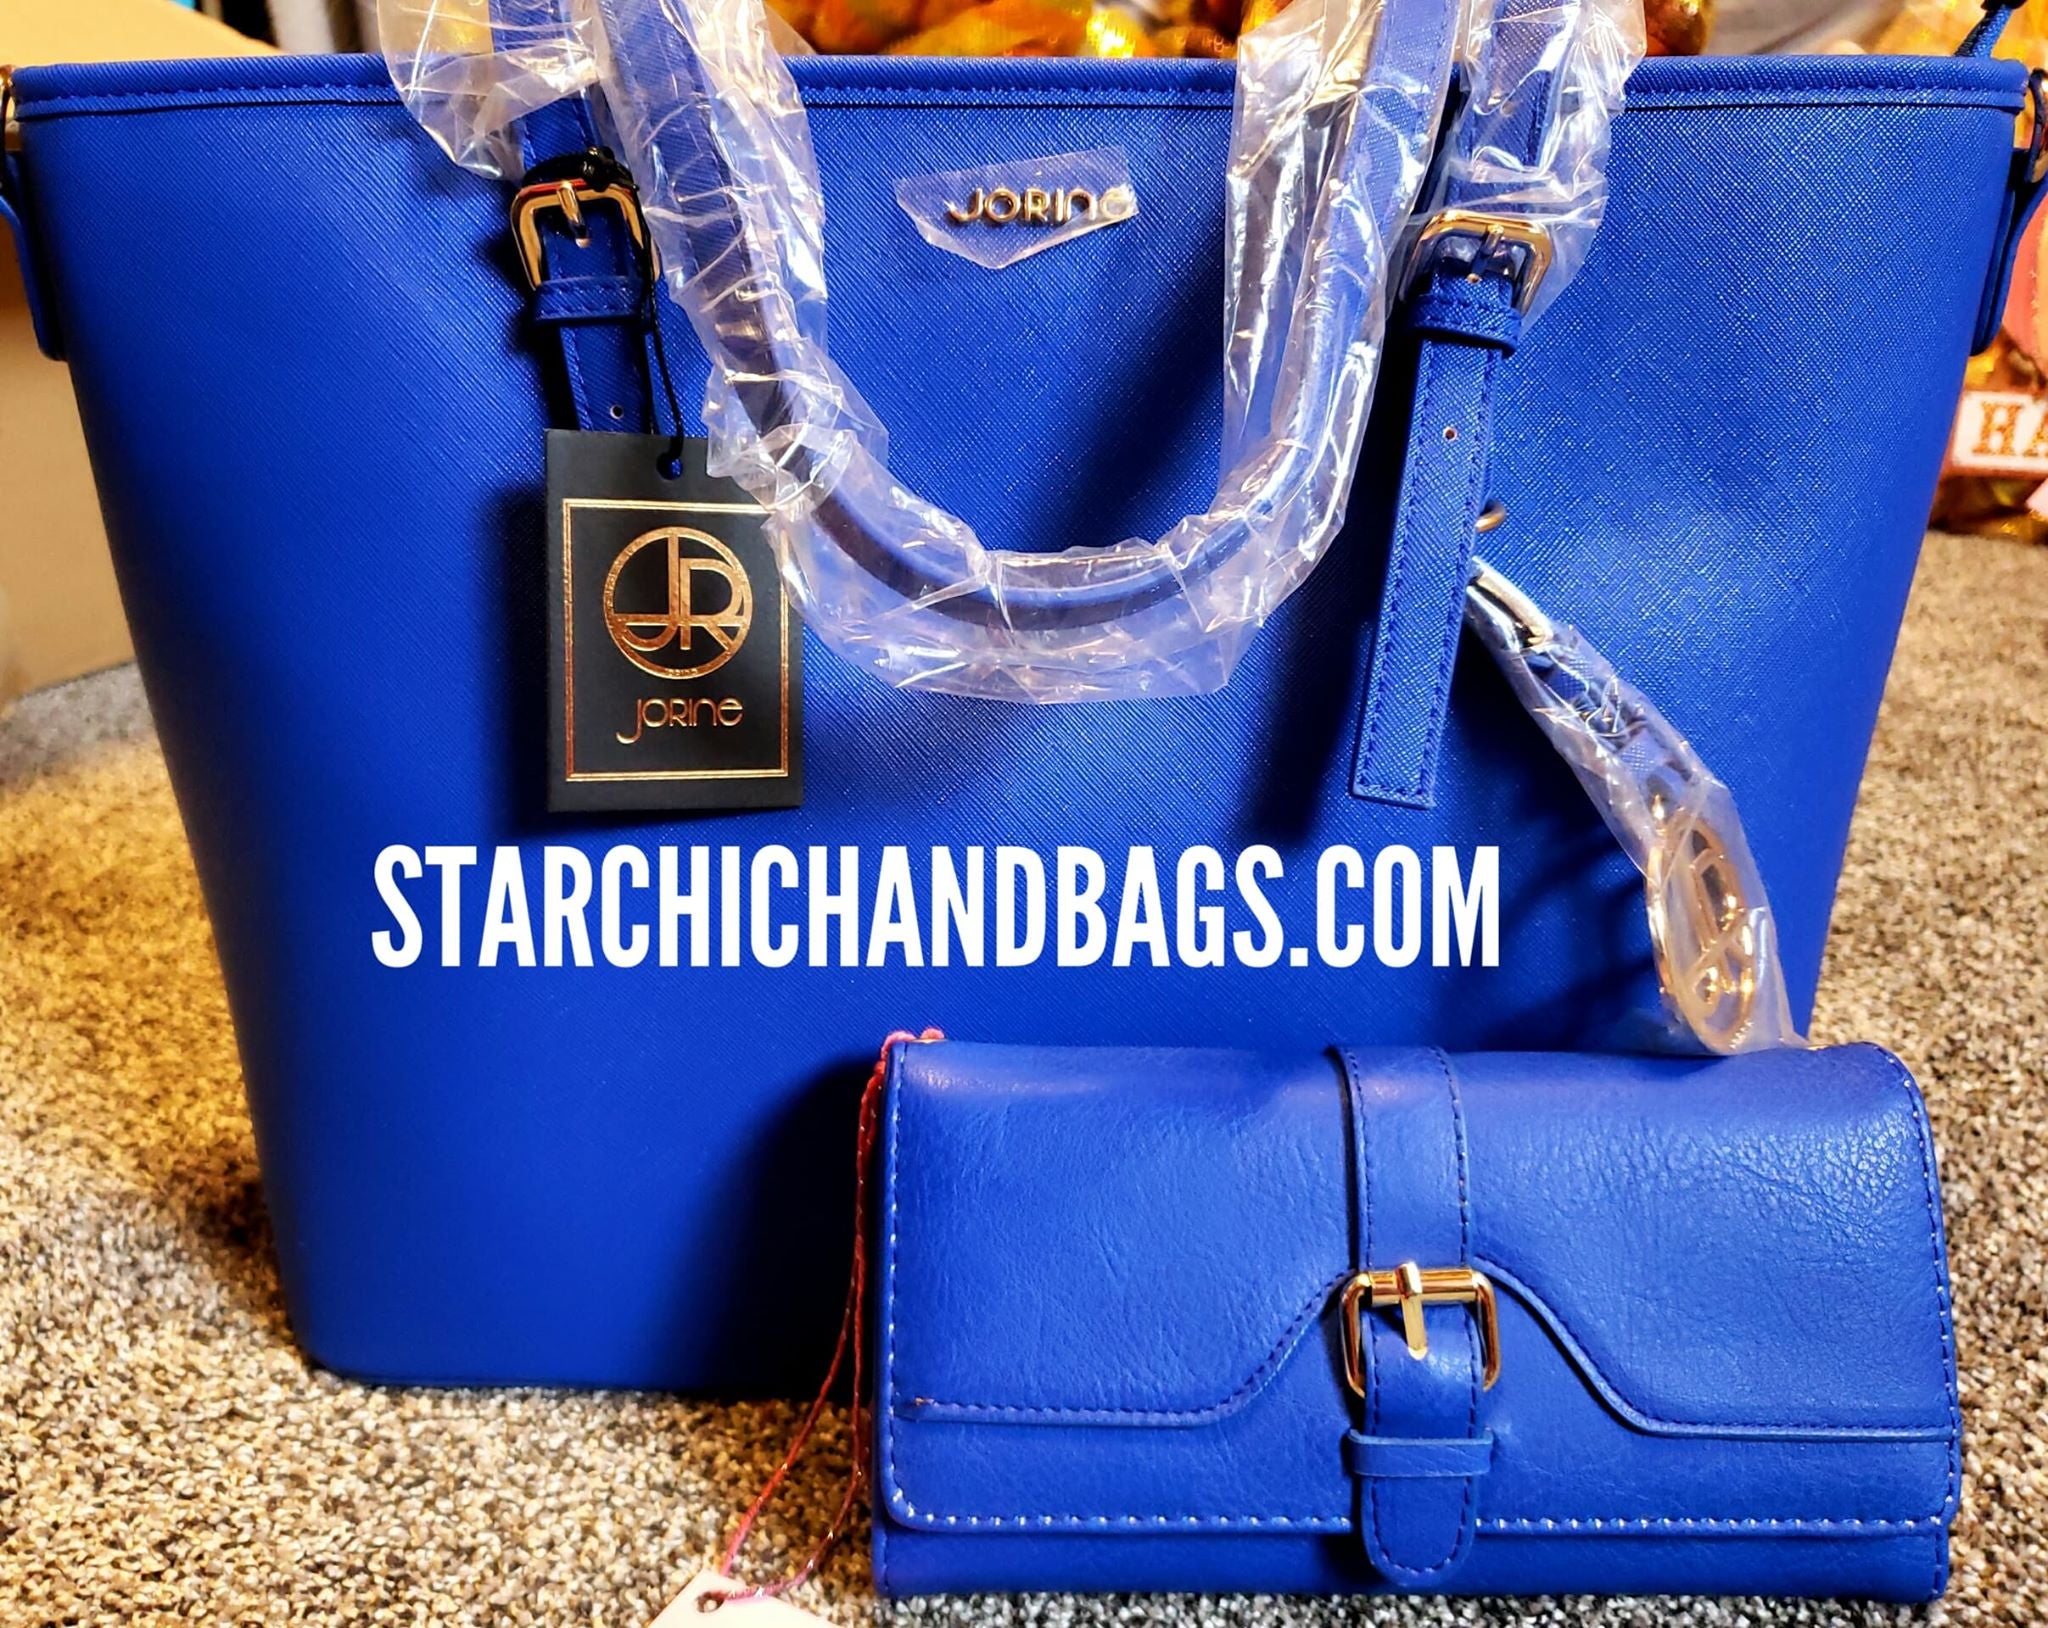 Home  Star Chic' Handbags & Boutique